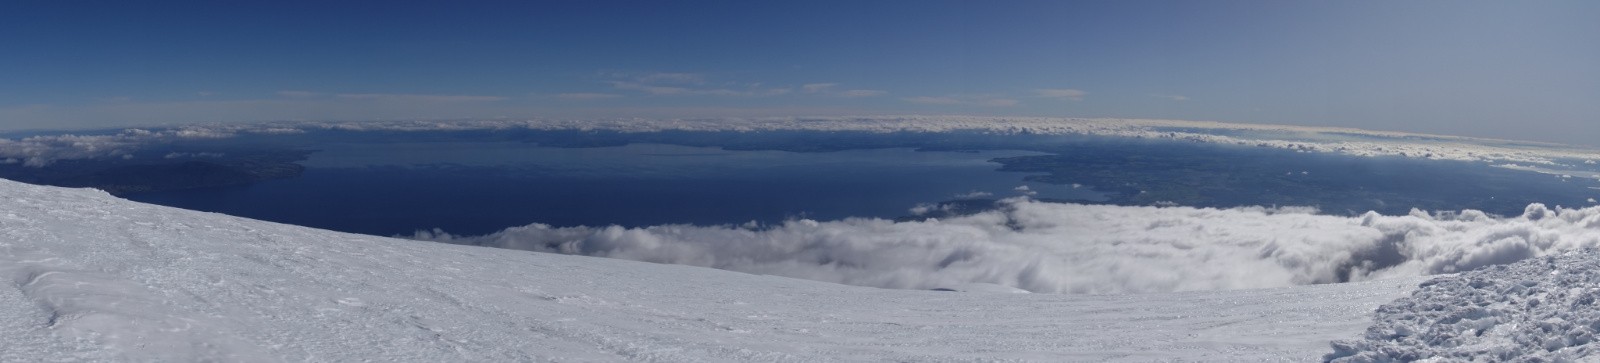 Panoramique sur la Laguna Llanquihue